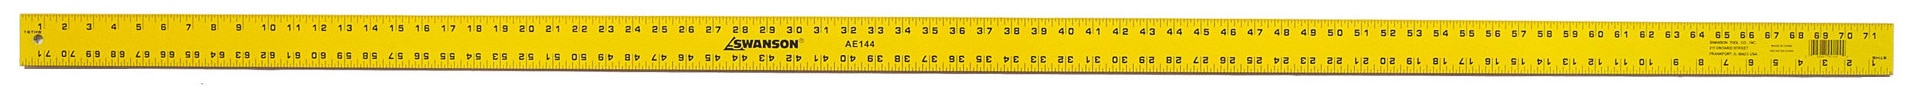 6 Metal Span Ruler with Stud-33-56-06